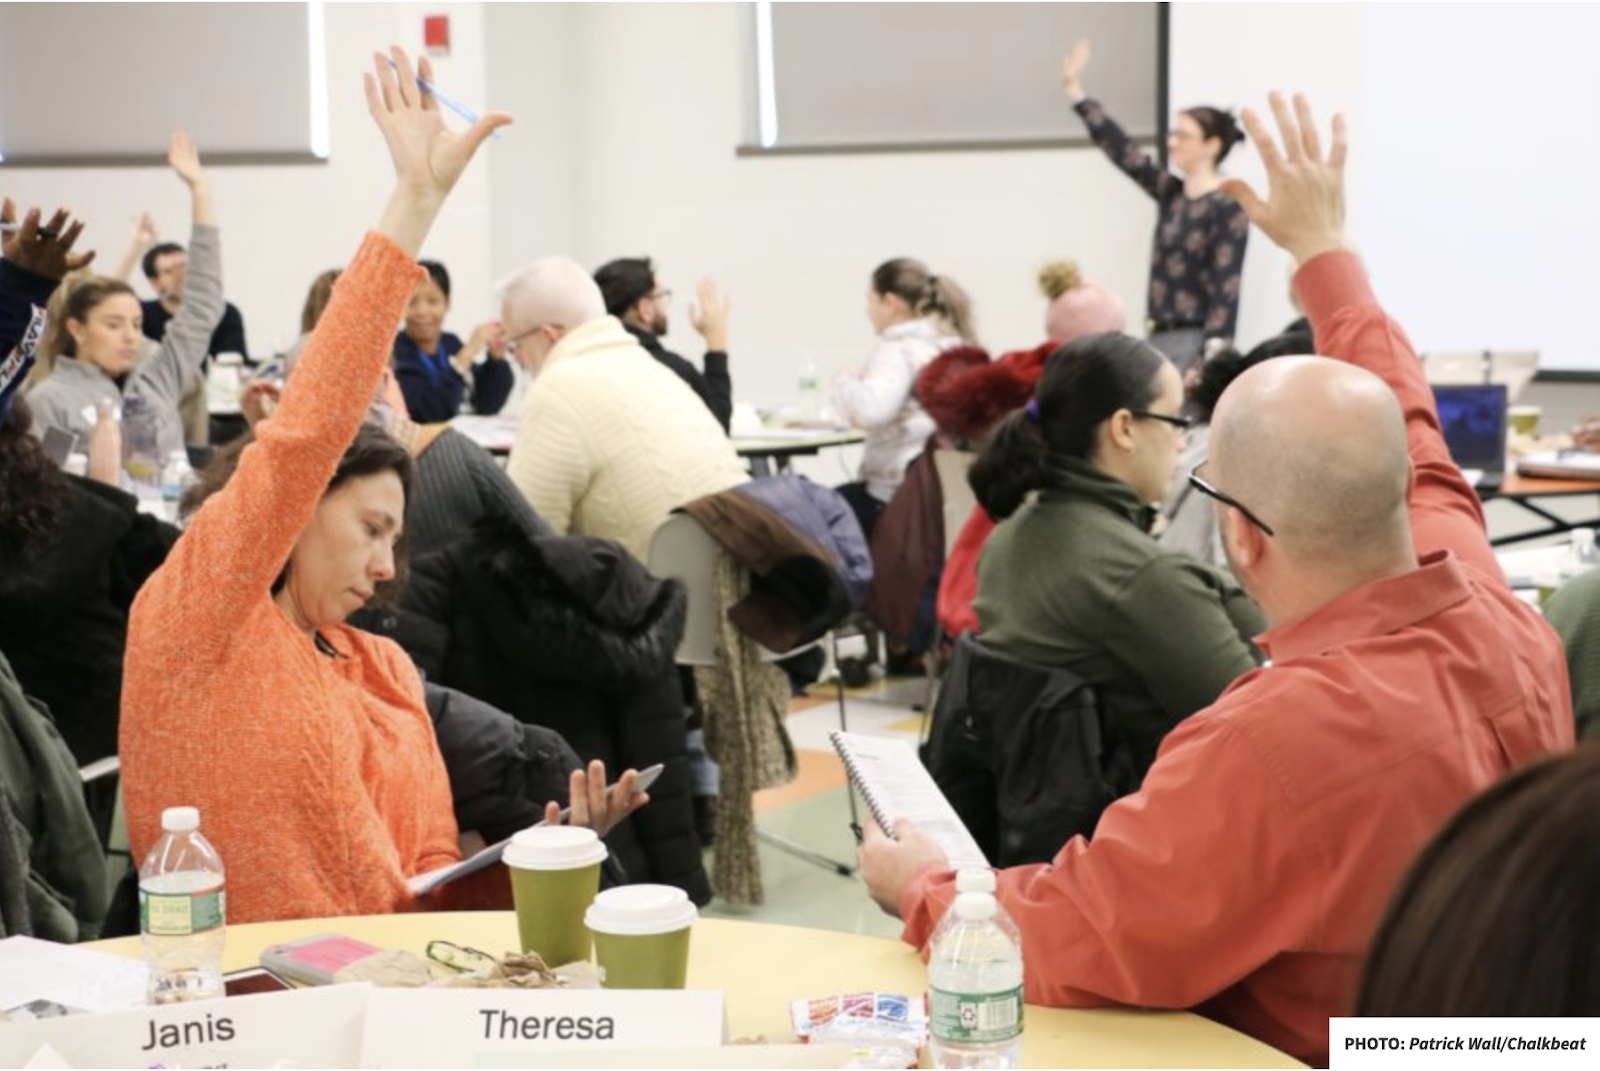 From Chalkbeat Newark: “Newark reading teachers get help from an unlikely source: a charter school network”